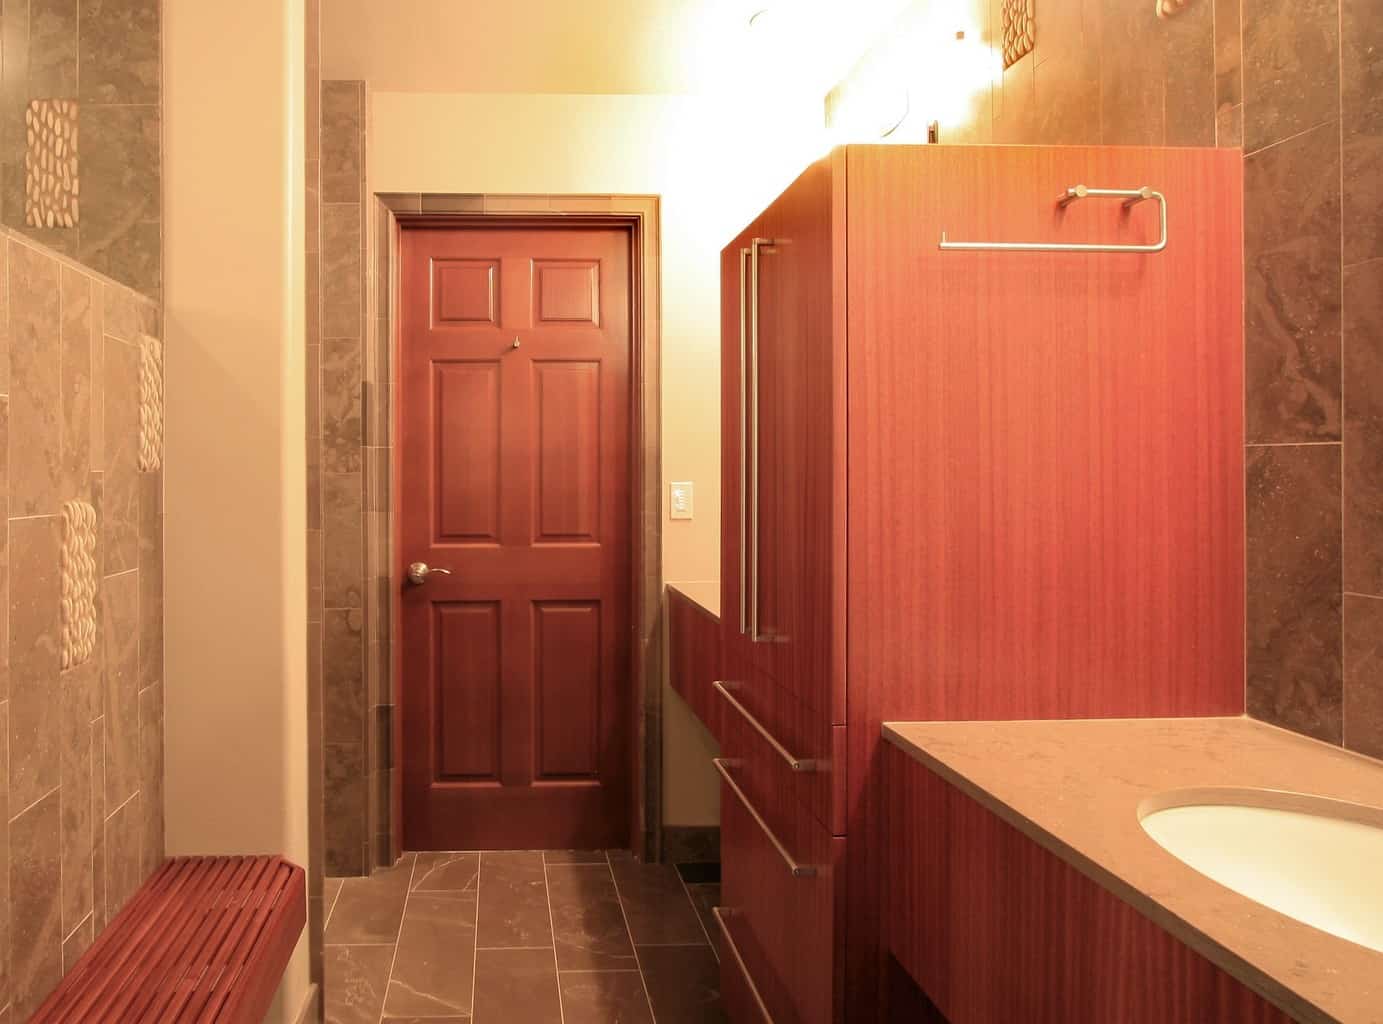 Kitchen And Bathroom Remodeling Contractors Salem Oregon - master bedroom